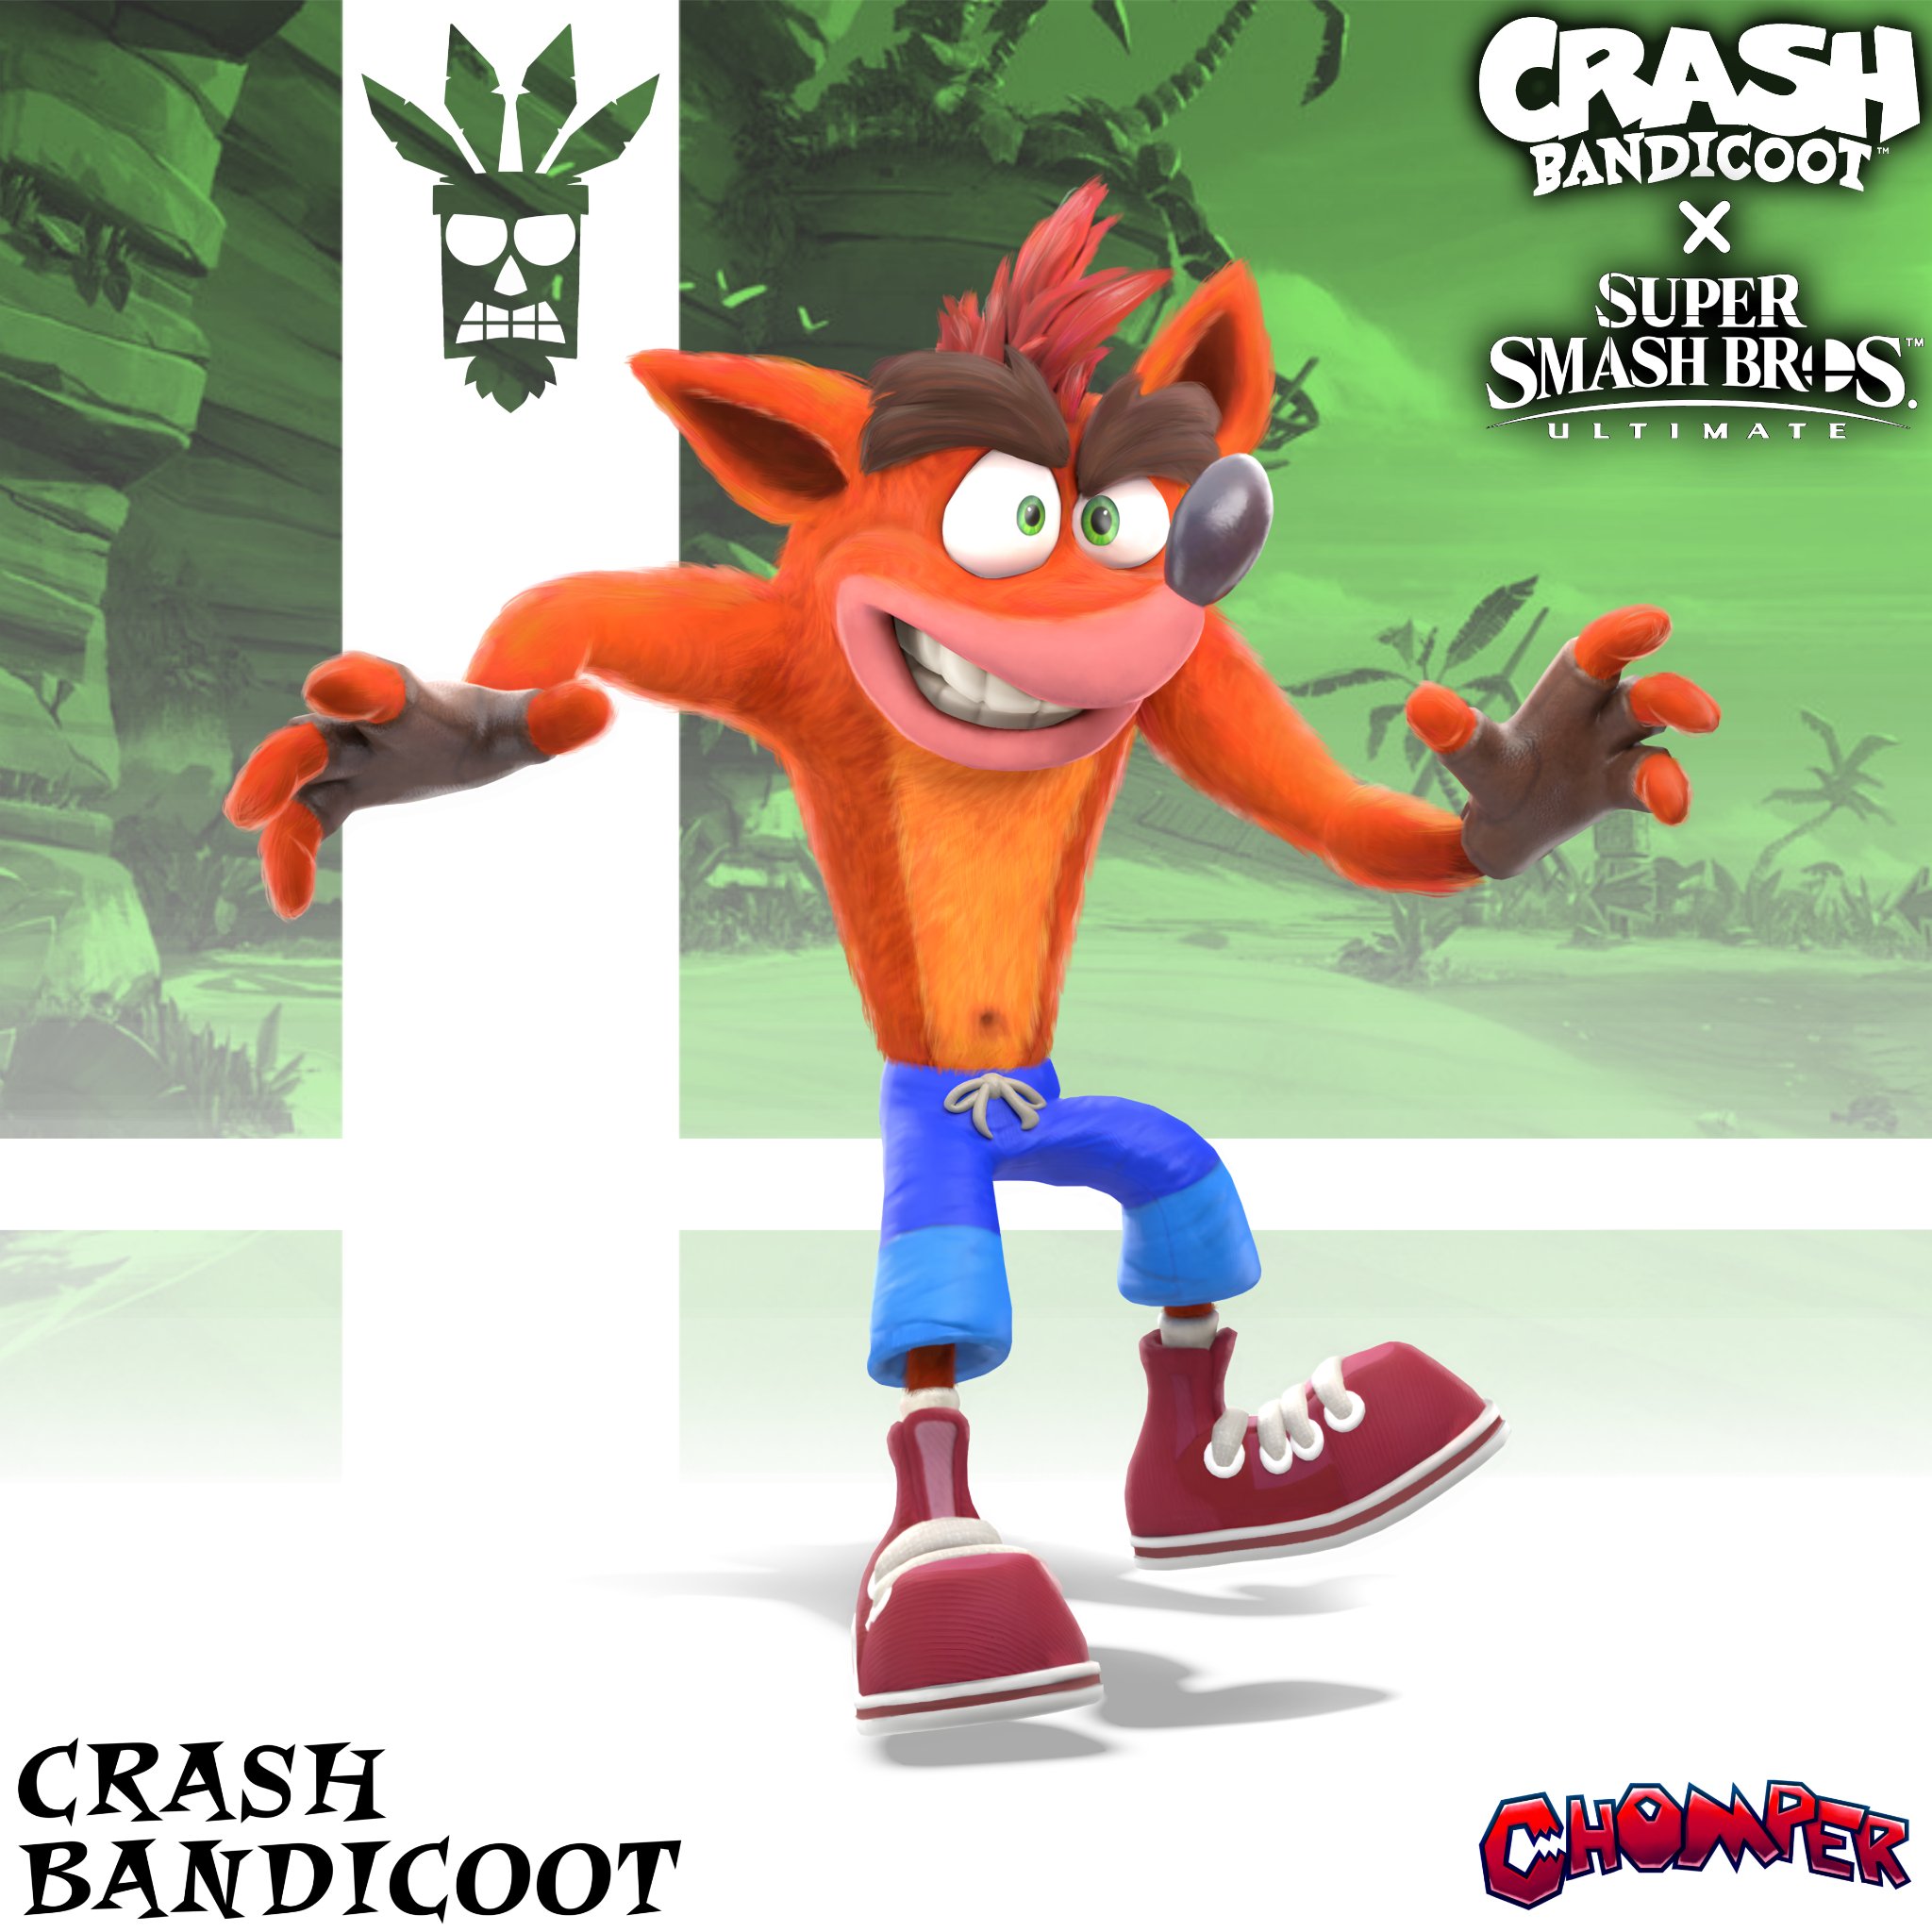 Super Smash Bros. Ultimate X Crash Bandicoot